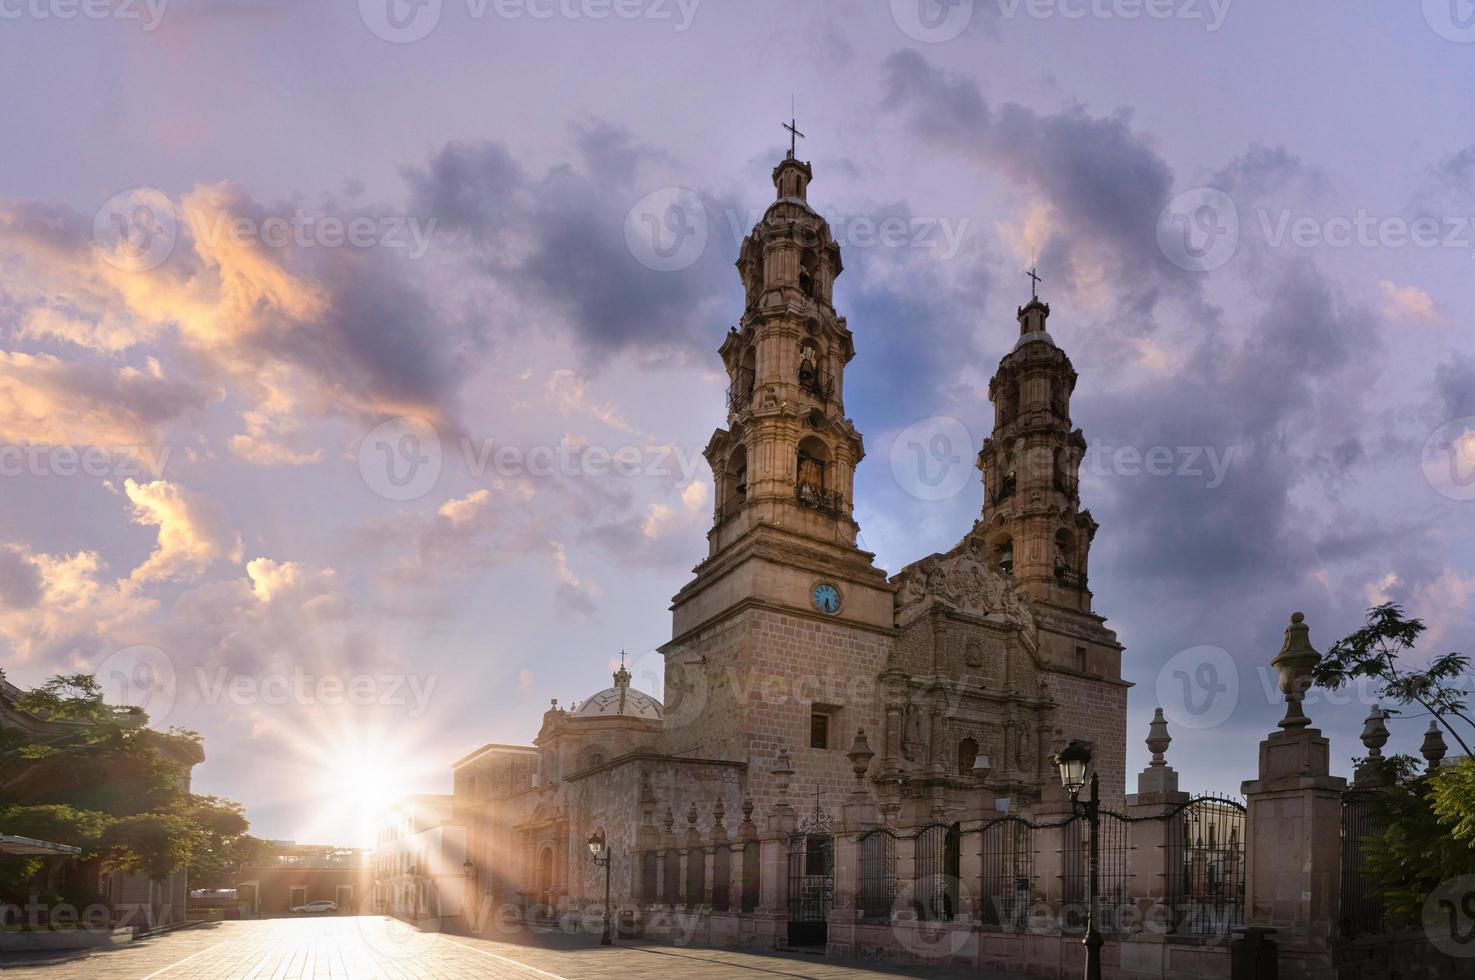 Mexiko, aguascalientes katedral basilika i historiska koloniala centrum nära plaza de la patria foto